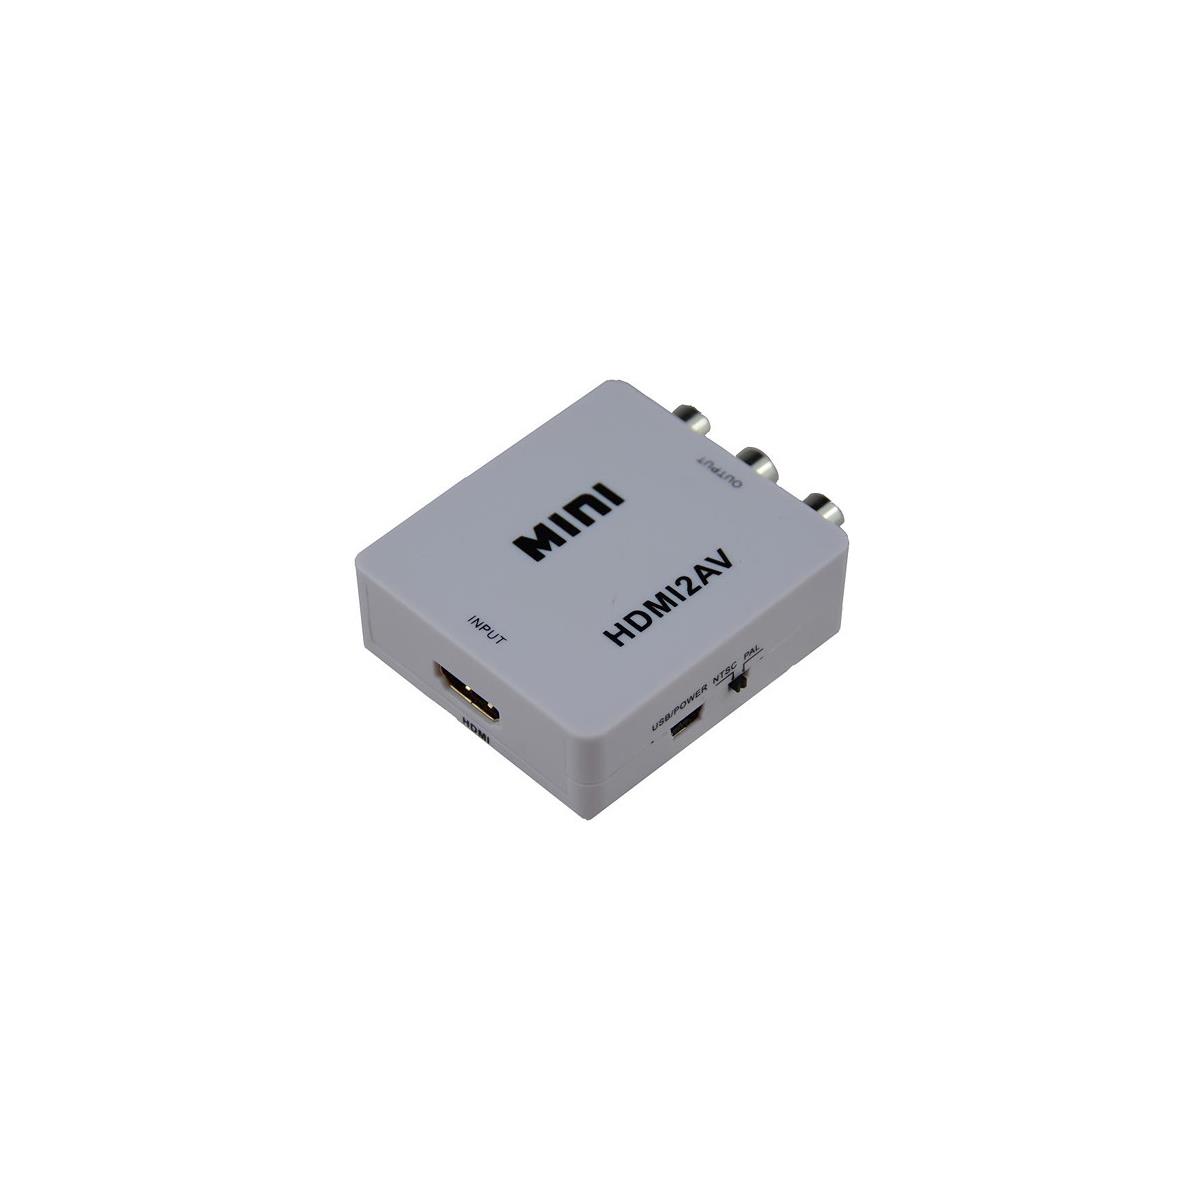 Image of Avinair Spitfire Pro Mini HDMI to Composite Video Converter